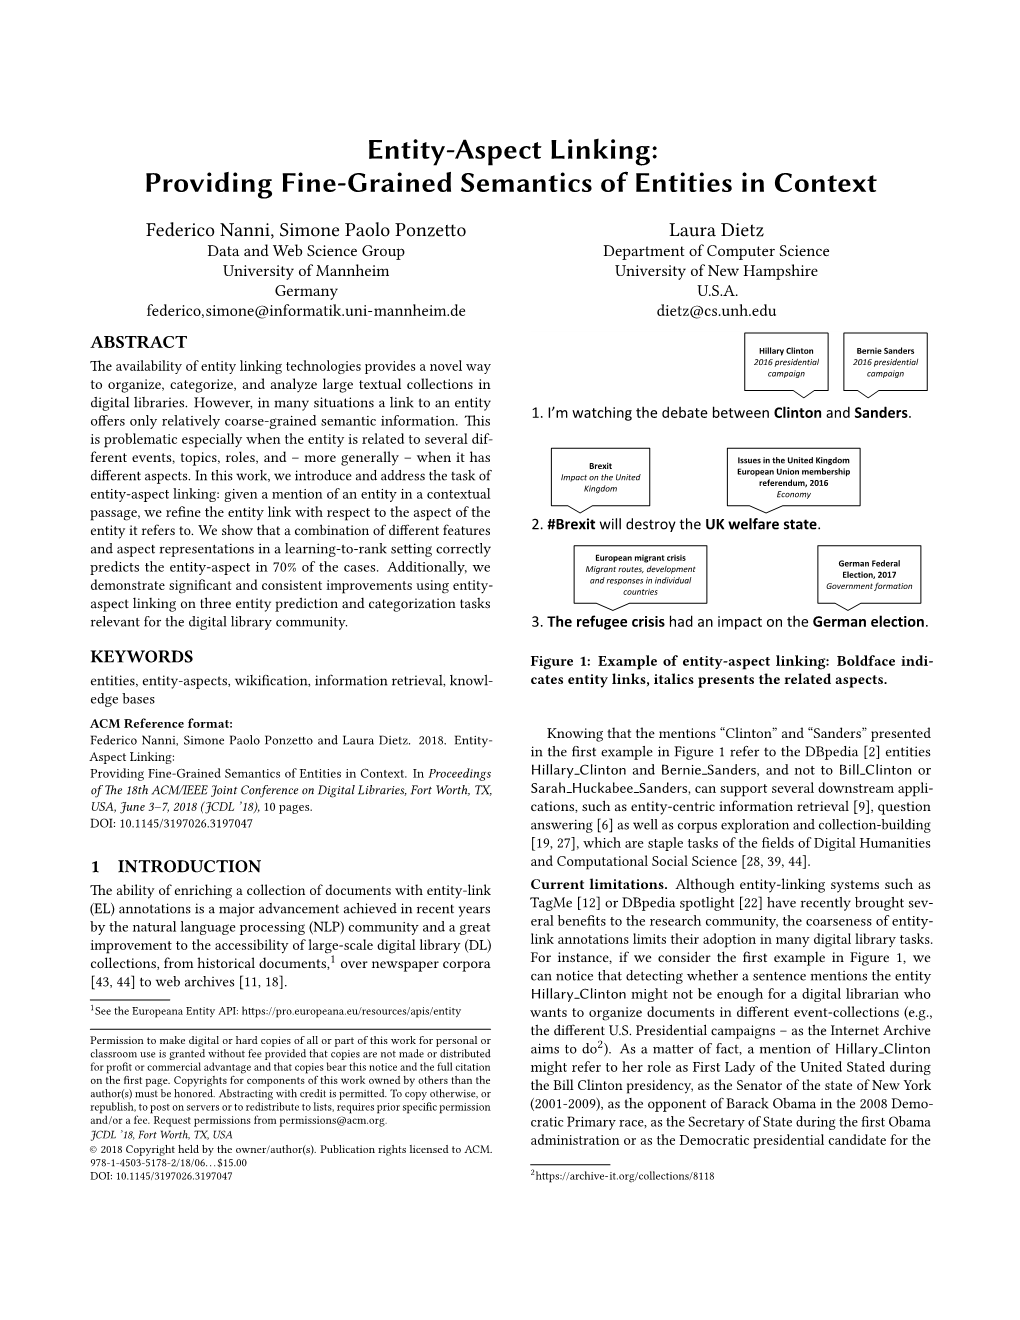 Entity-Aspect Linking: Providing Fine-Grained Semantics of Entities in Context